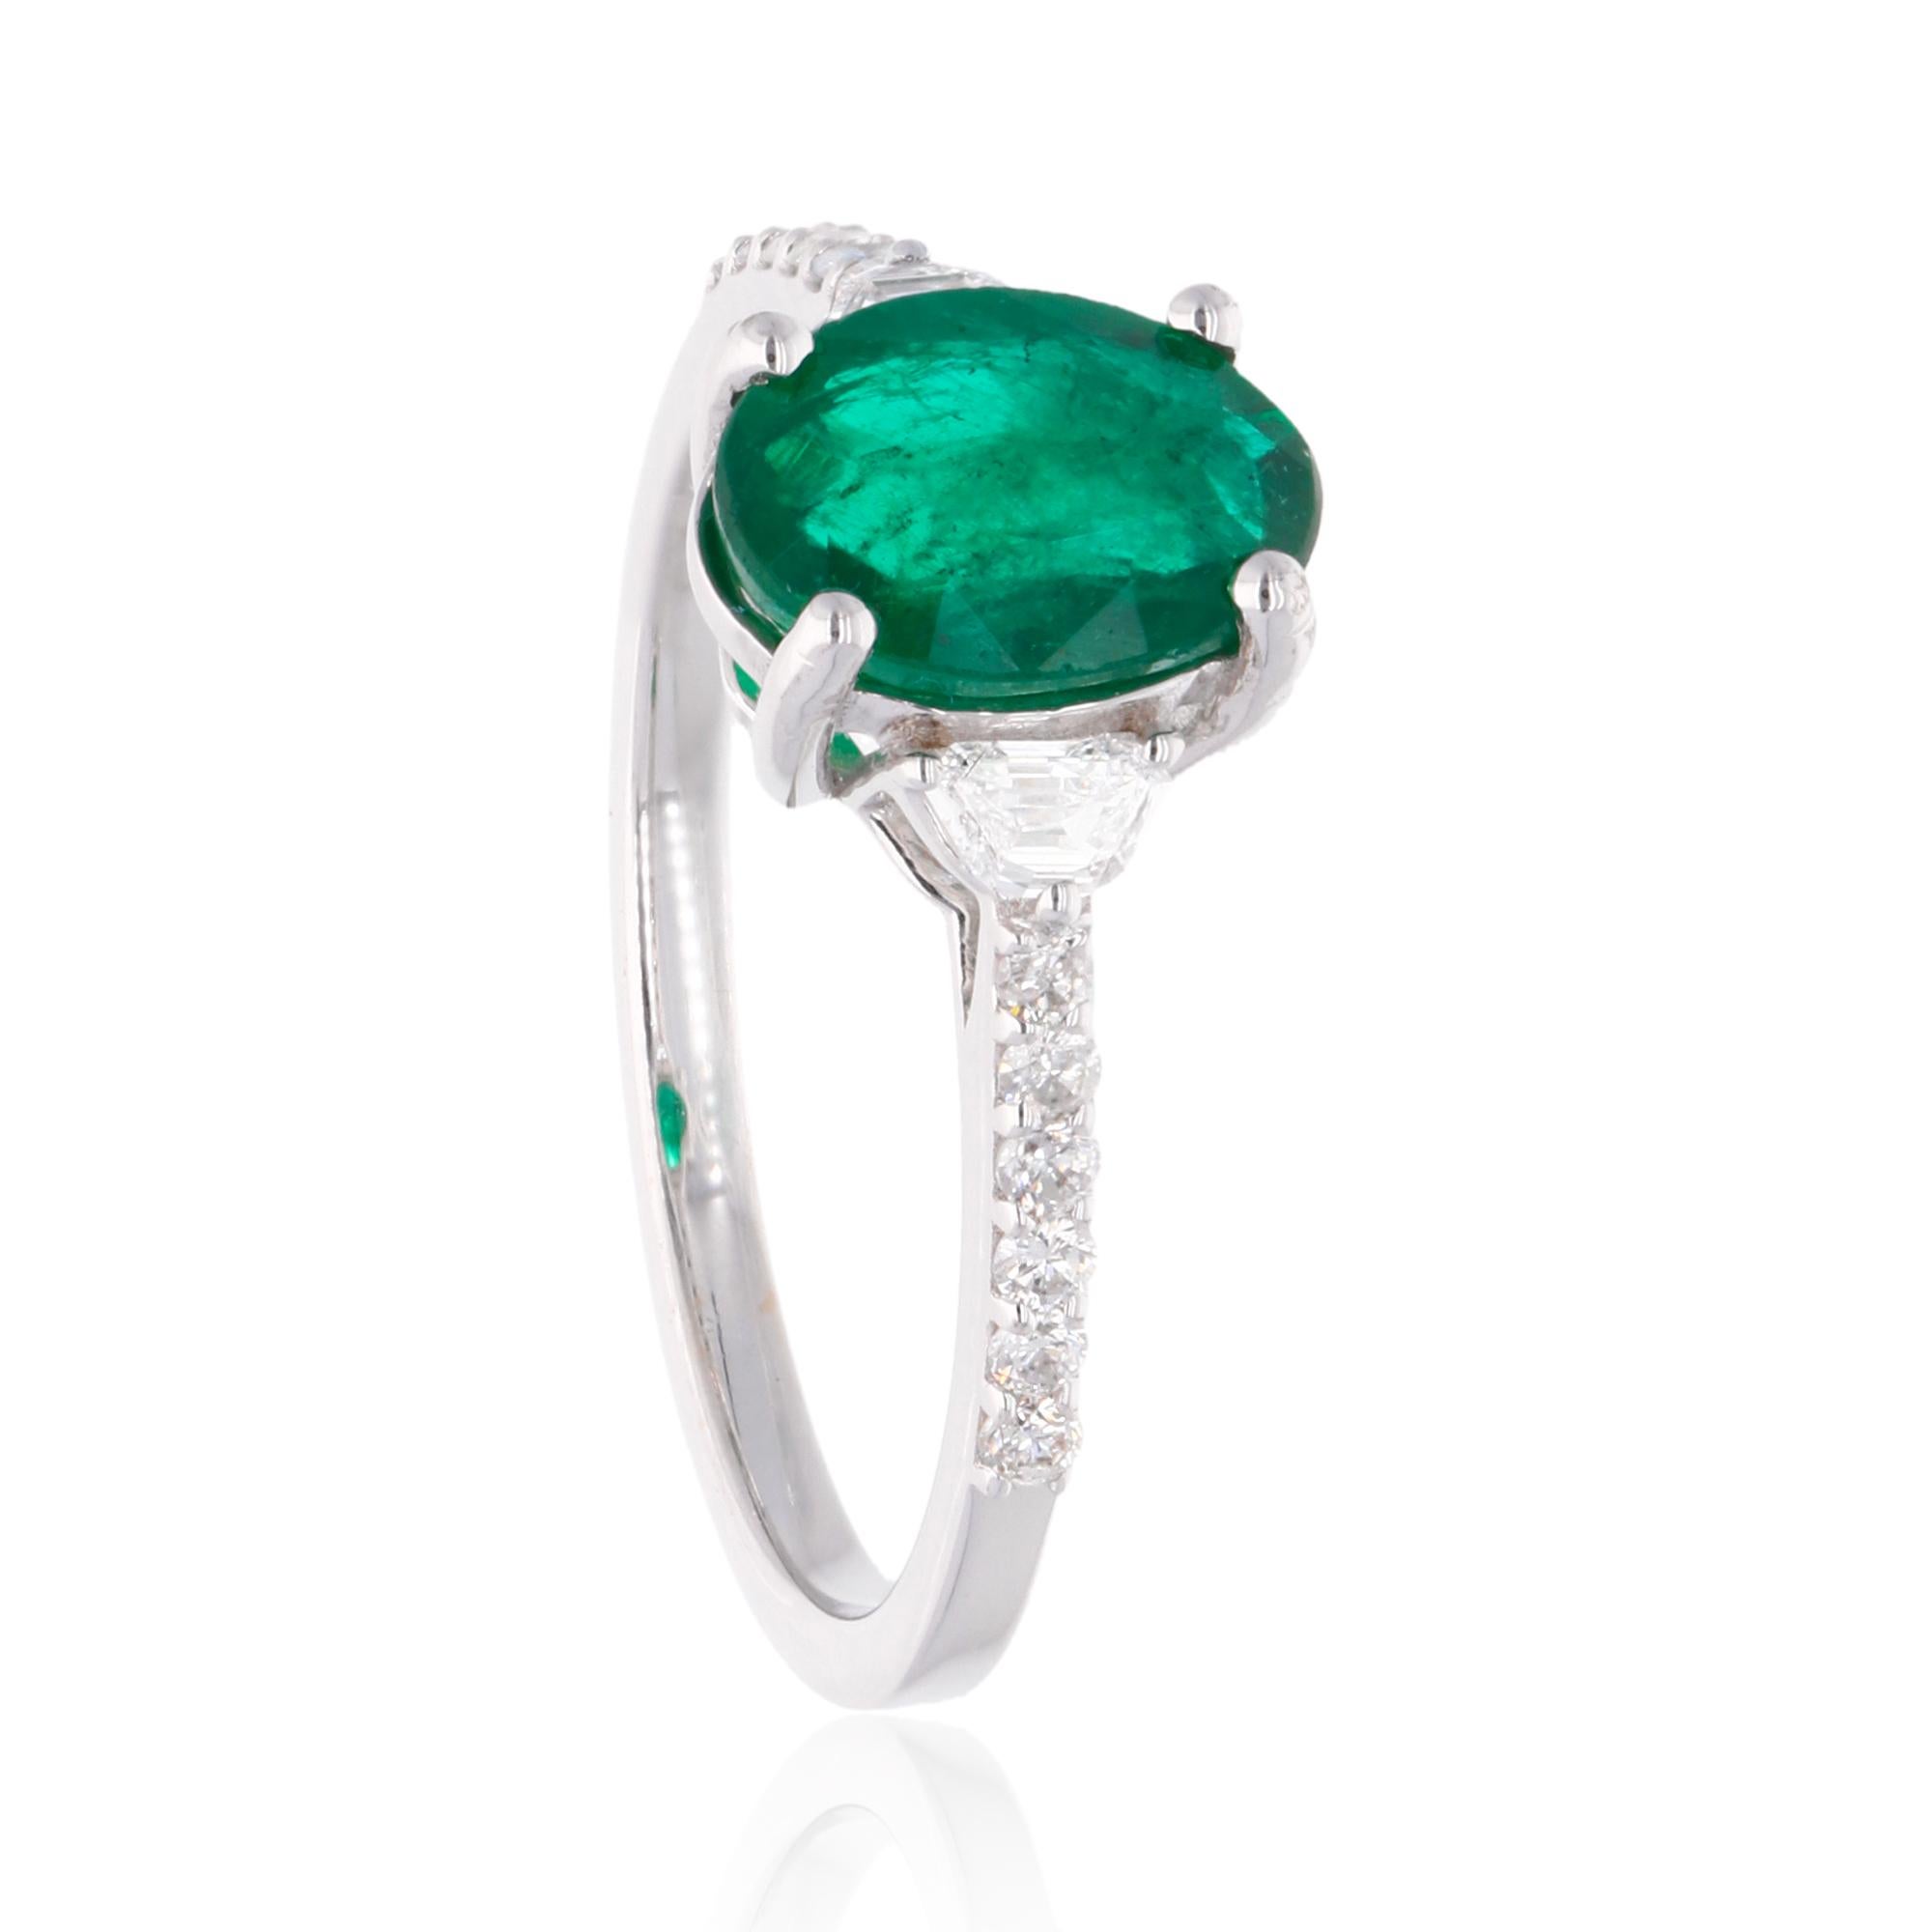 Oval Cut Zambian Emerald Gemstone Cocktail Ring Diamond 18 Solid Karat White Gold Jewelry For Sale